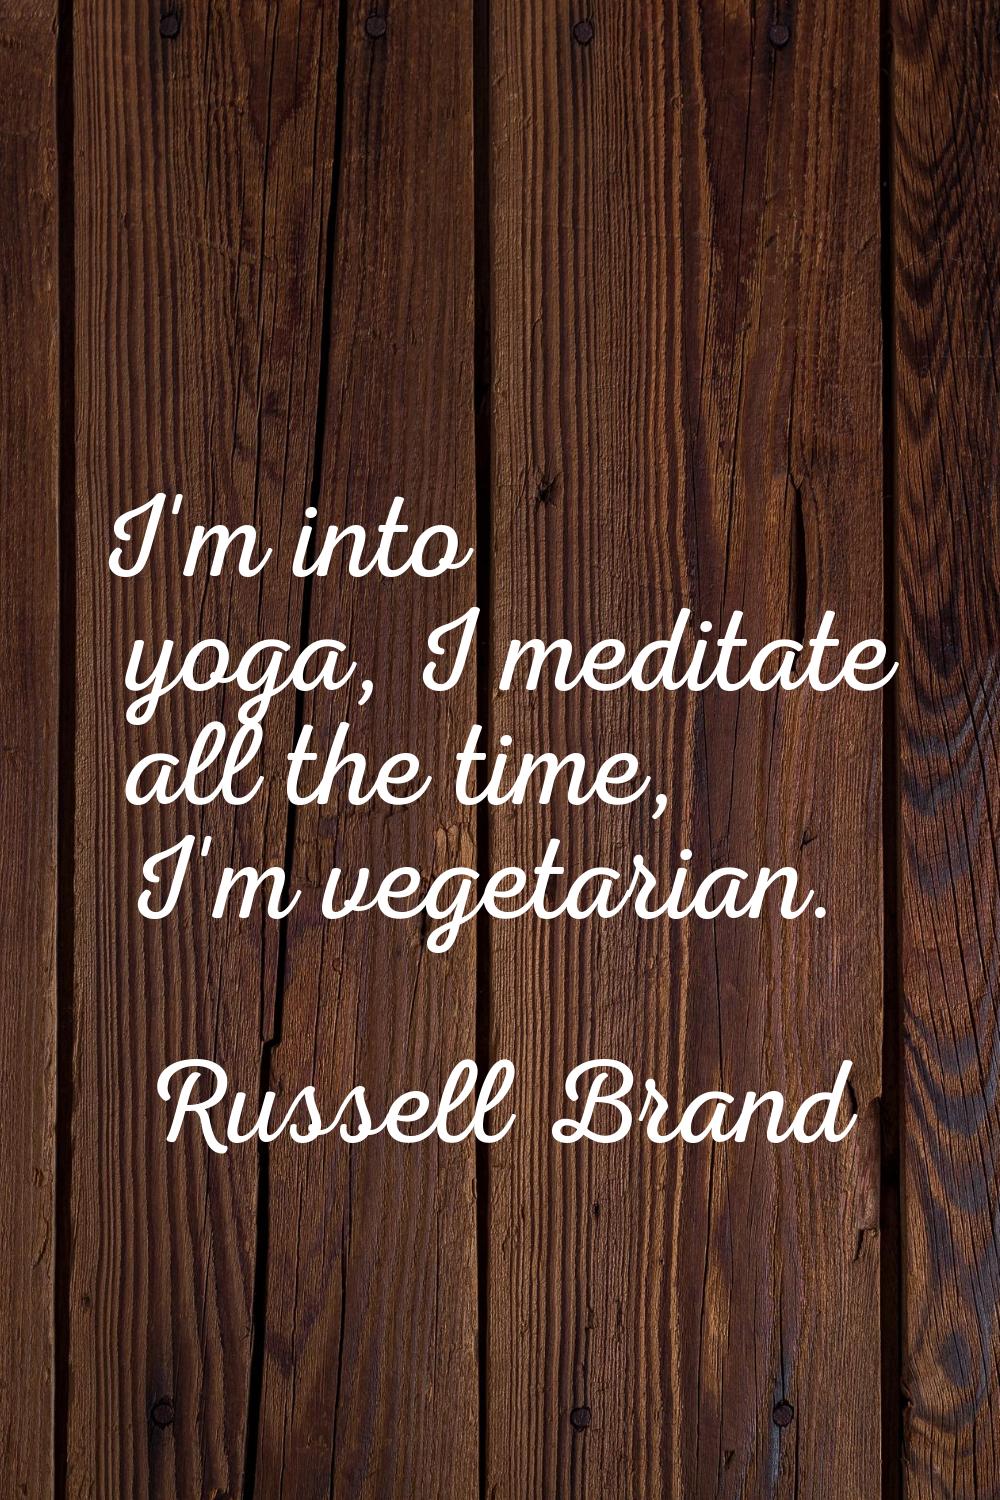 I'm into yoga, I meditate all the time, I'm vegetarian.